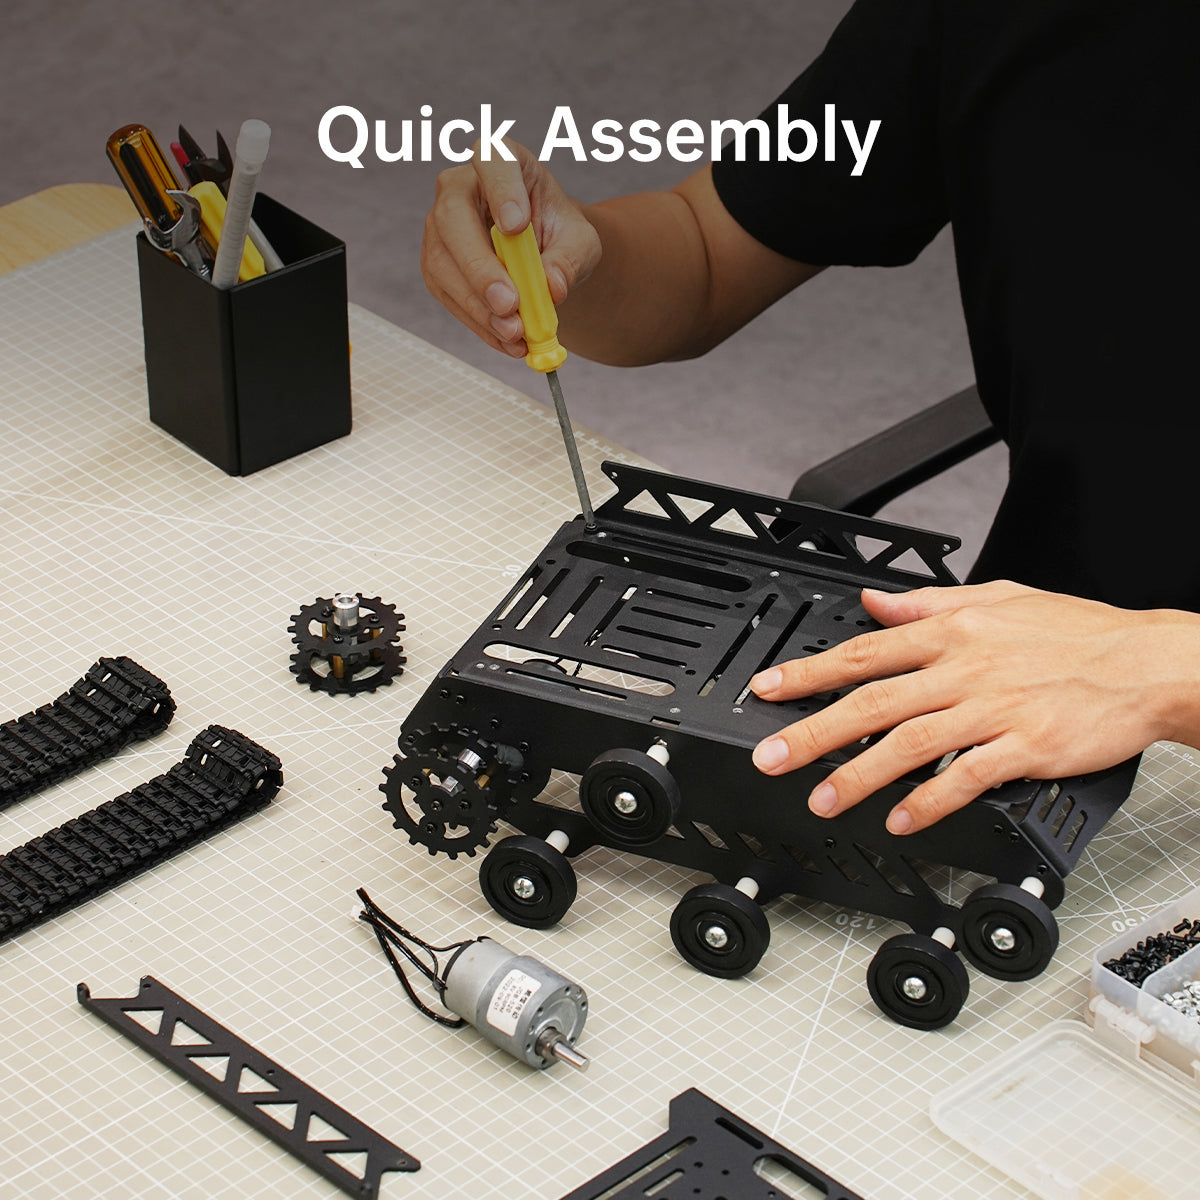 Hiwonder Tank Car Chassis Kit Shock Absorbing Robot with 2WD Motors for Arduino/ Raspberry Pi/ Jetson Nano DIY Robotic Car Learning Kit (Black)